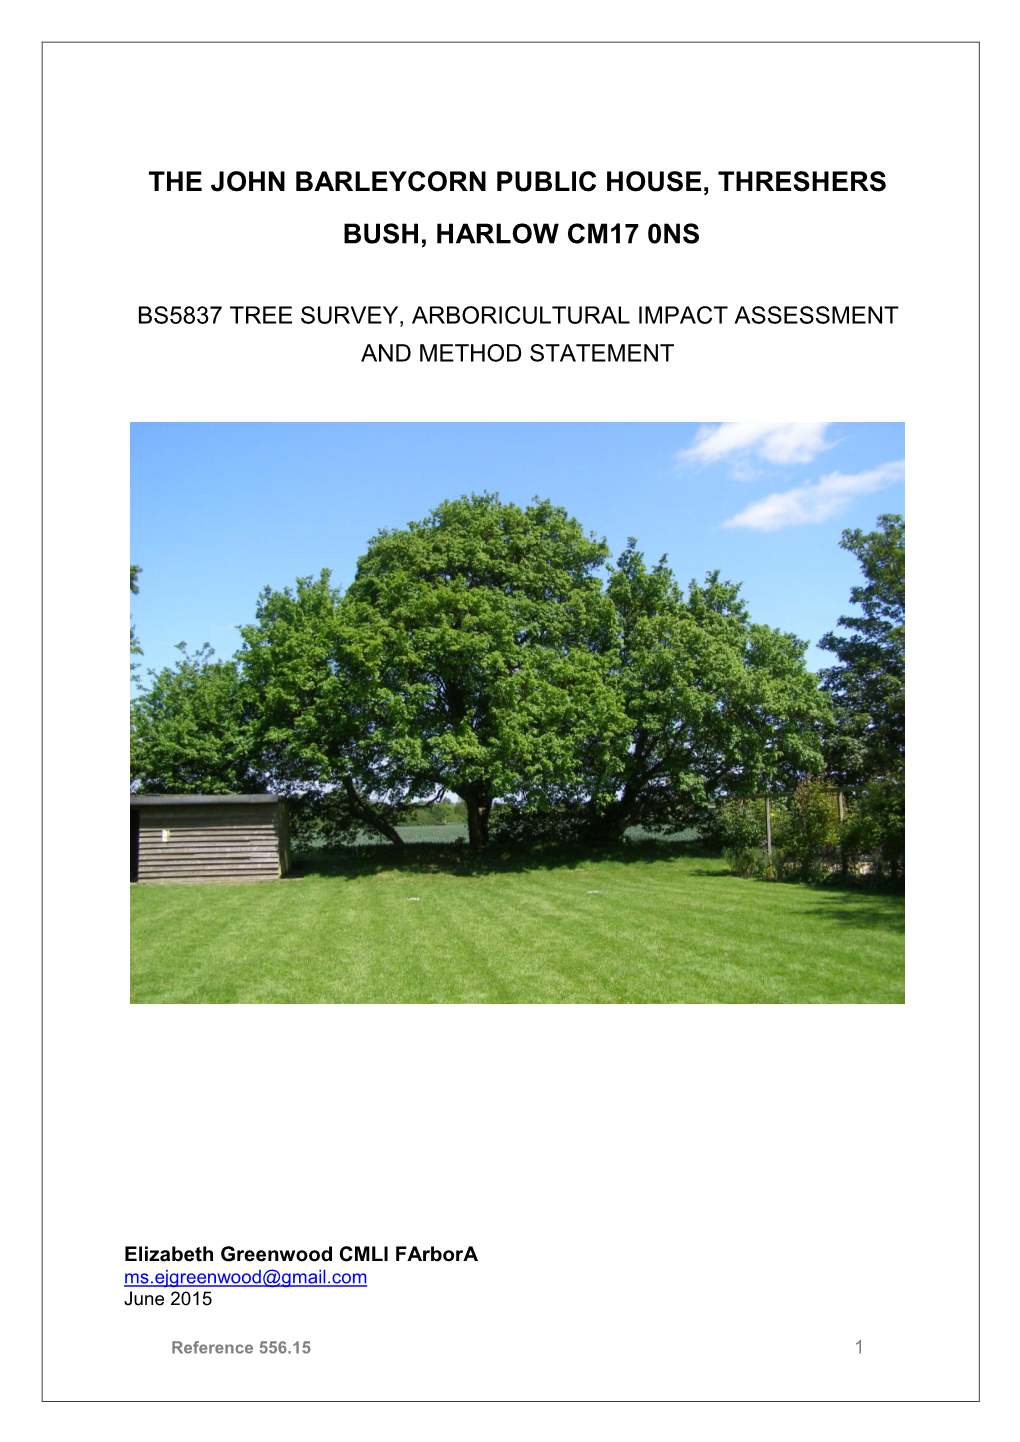 THE JOHN BARLEYCORN PUBLIC HOUSE, THRESHERS BUSH, HARLOW CM17 0NS Arboricultural Impact Assessment and Method Statement